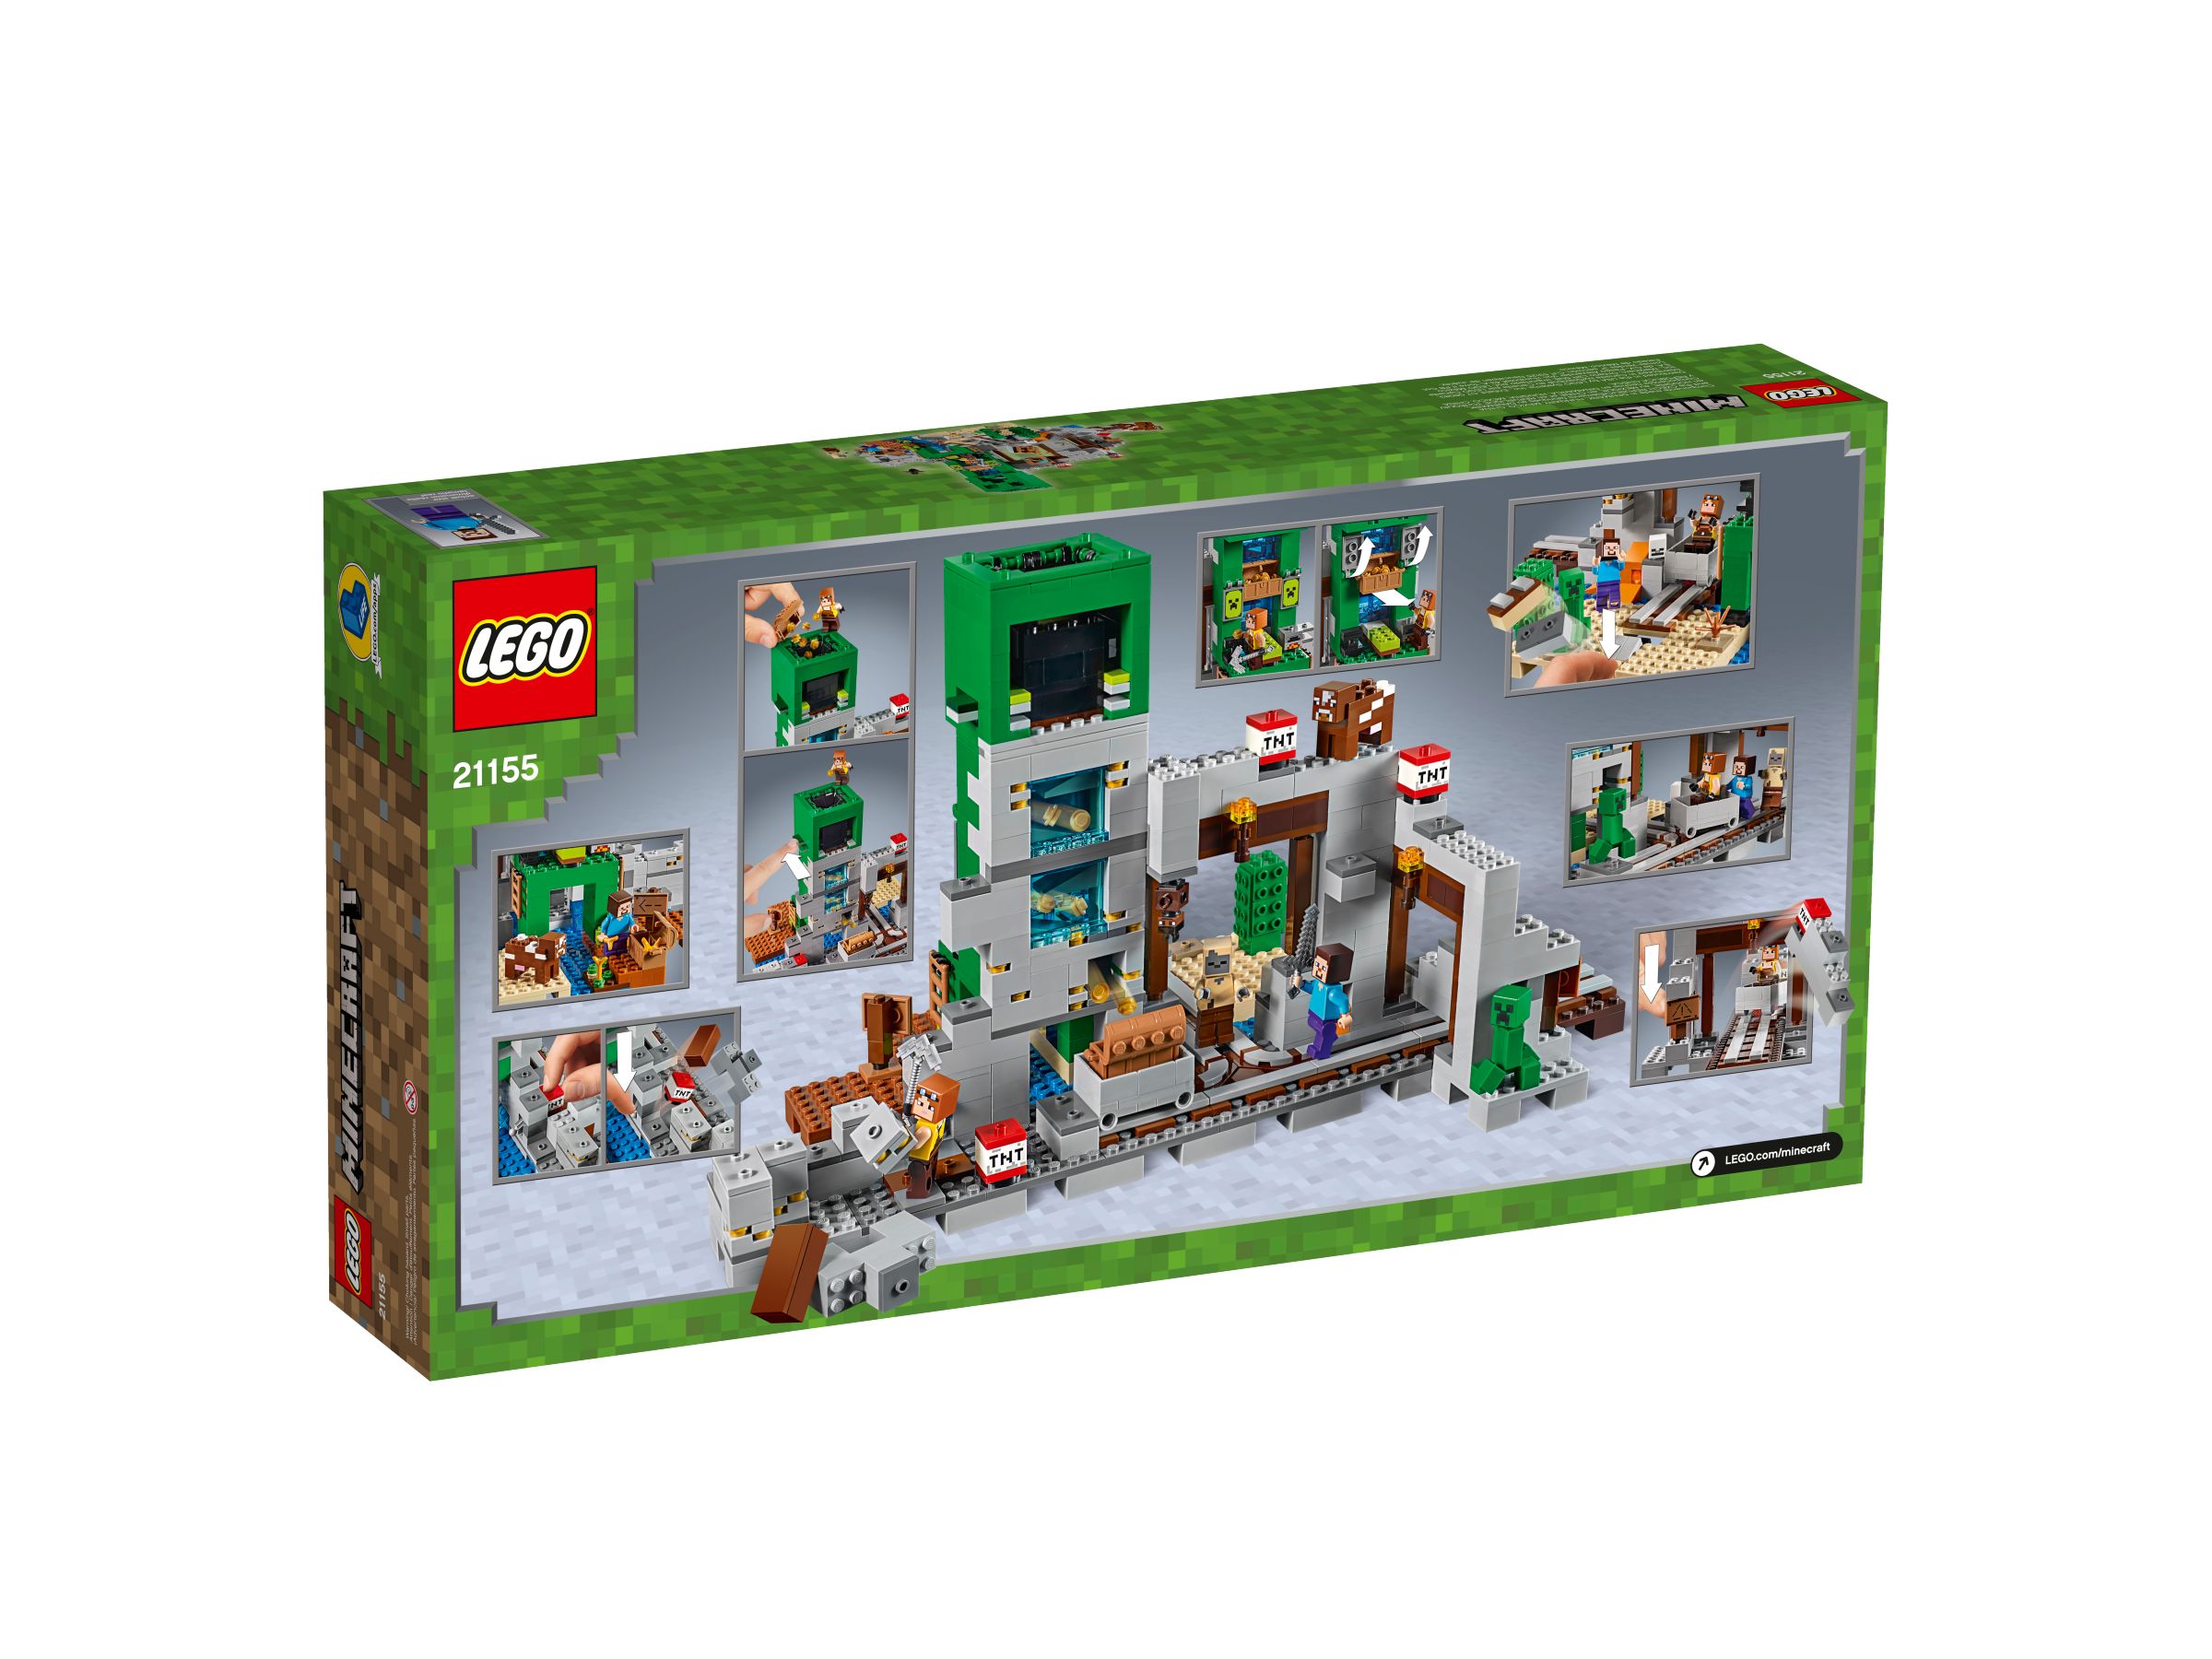 LEGO Minecraft 21155 Die Creeper™ Mine LEGO_21155_alt4.jpg